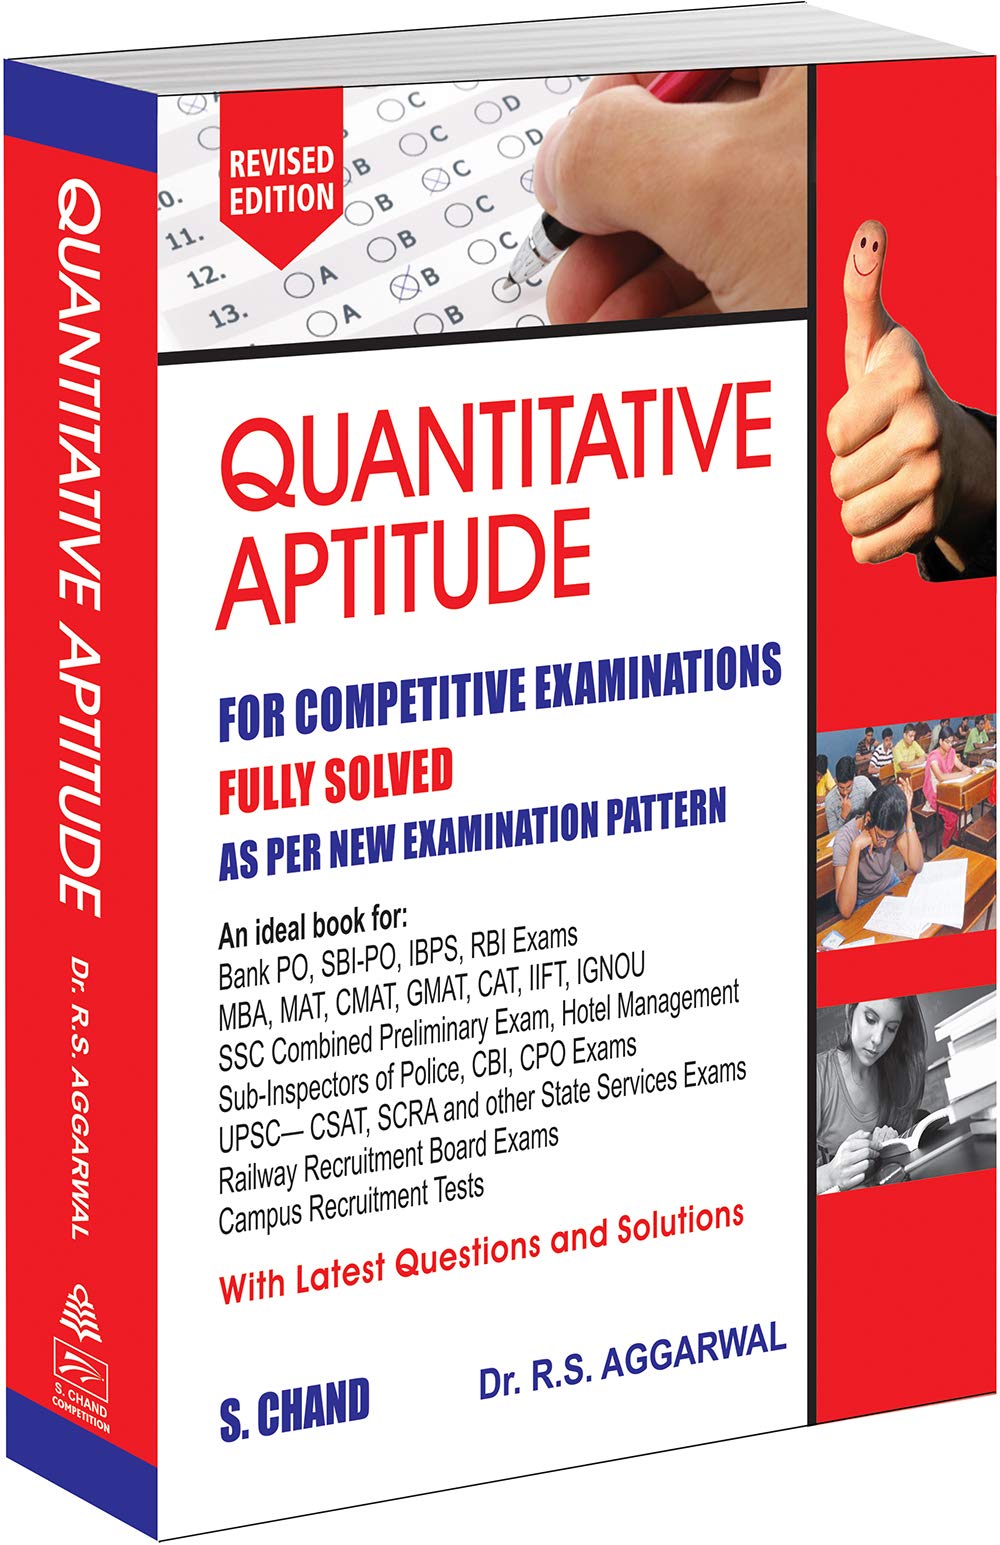 rs-agrawal-quantitative-aptitude-pdf-books-download-2021-hindi-english-book-online-quiz-gk